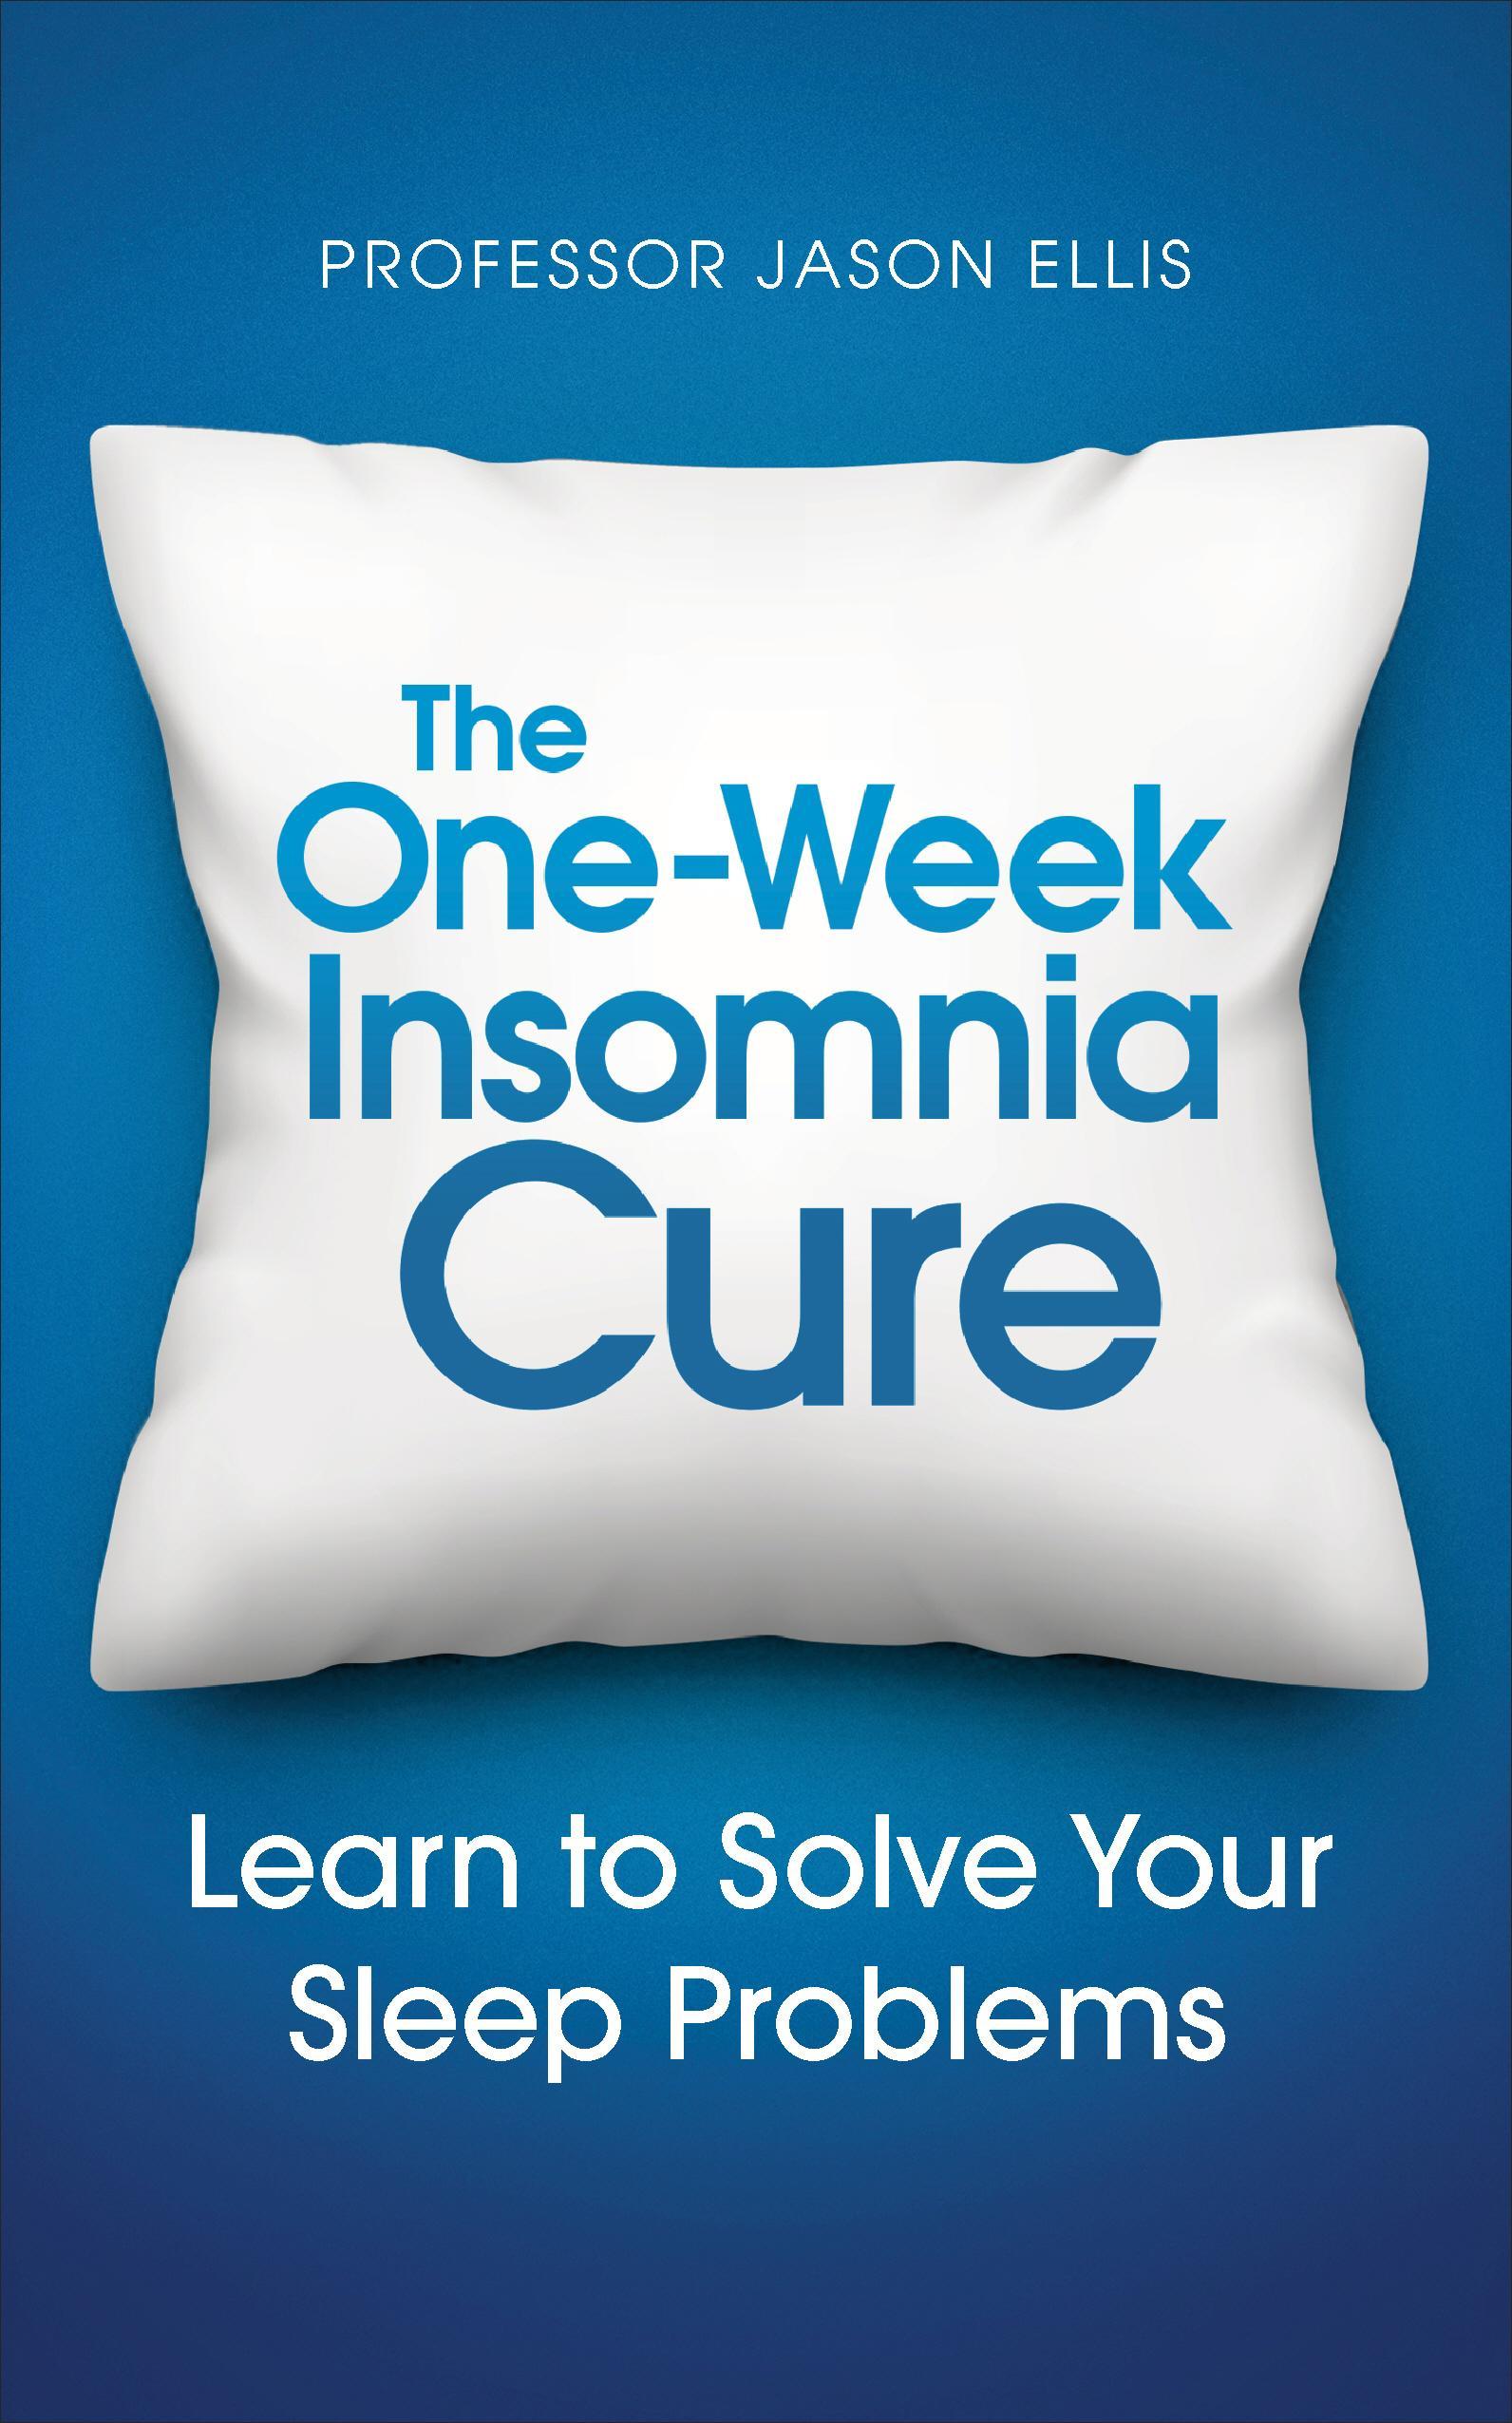 One-week Insomnia Cure